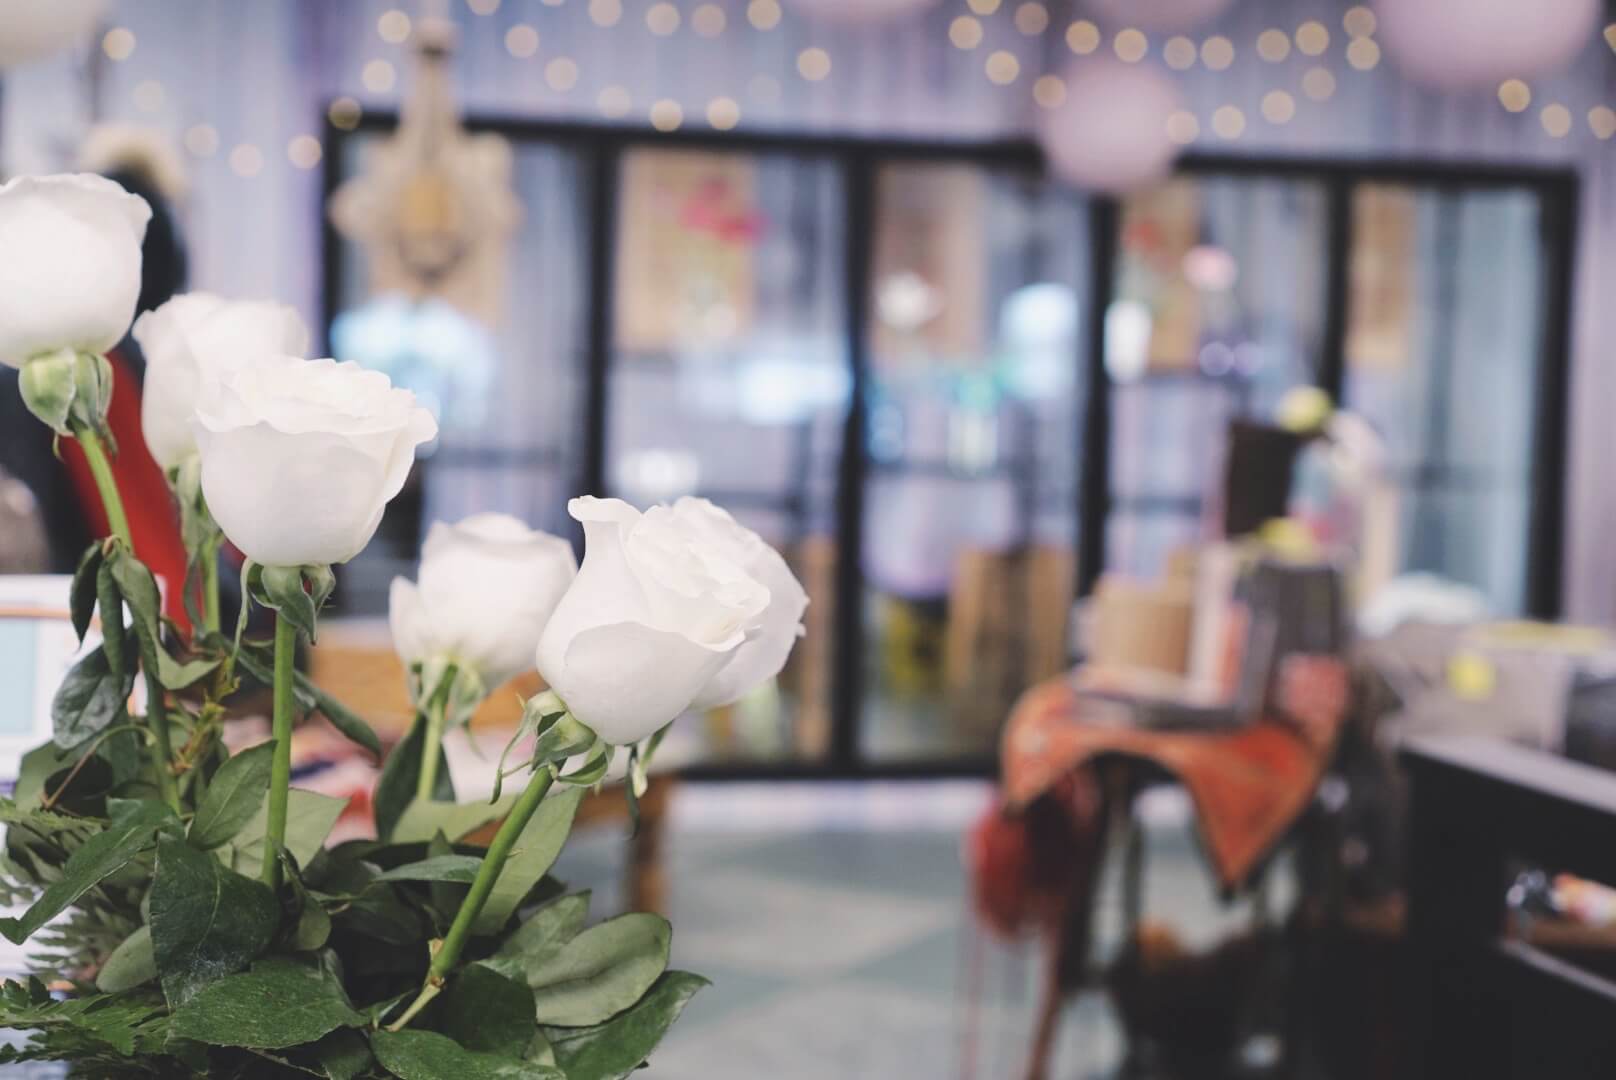 Pea Pod & Blossom - Inside Our Store